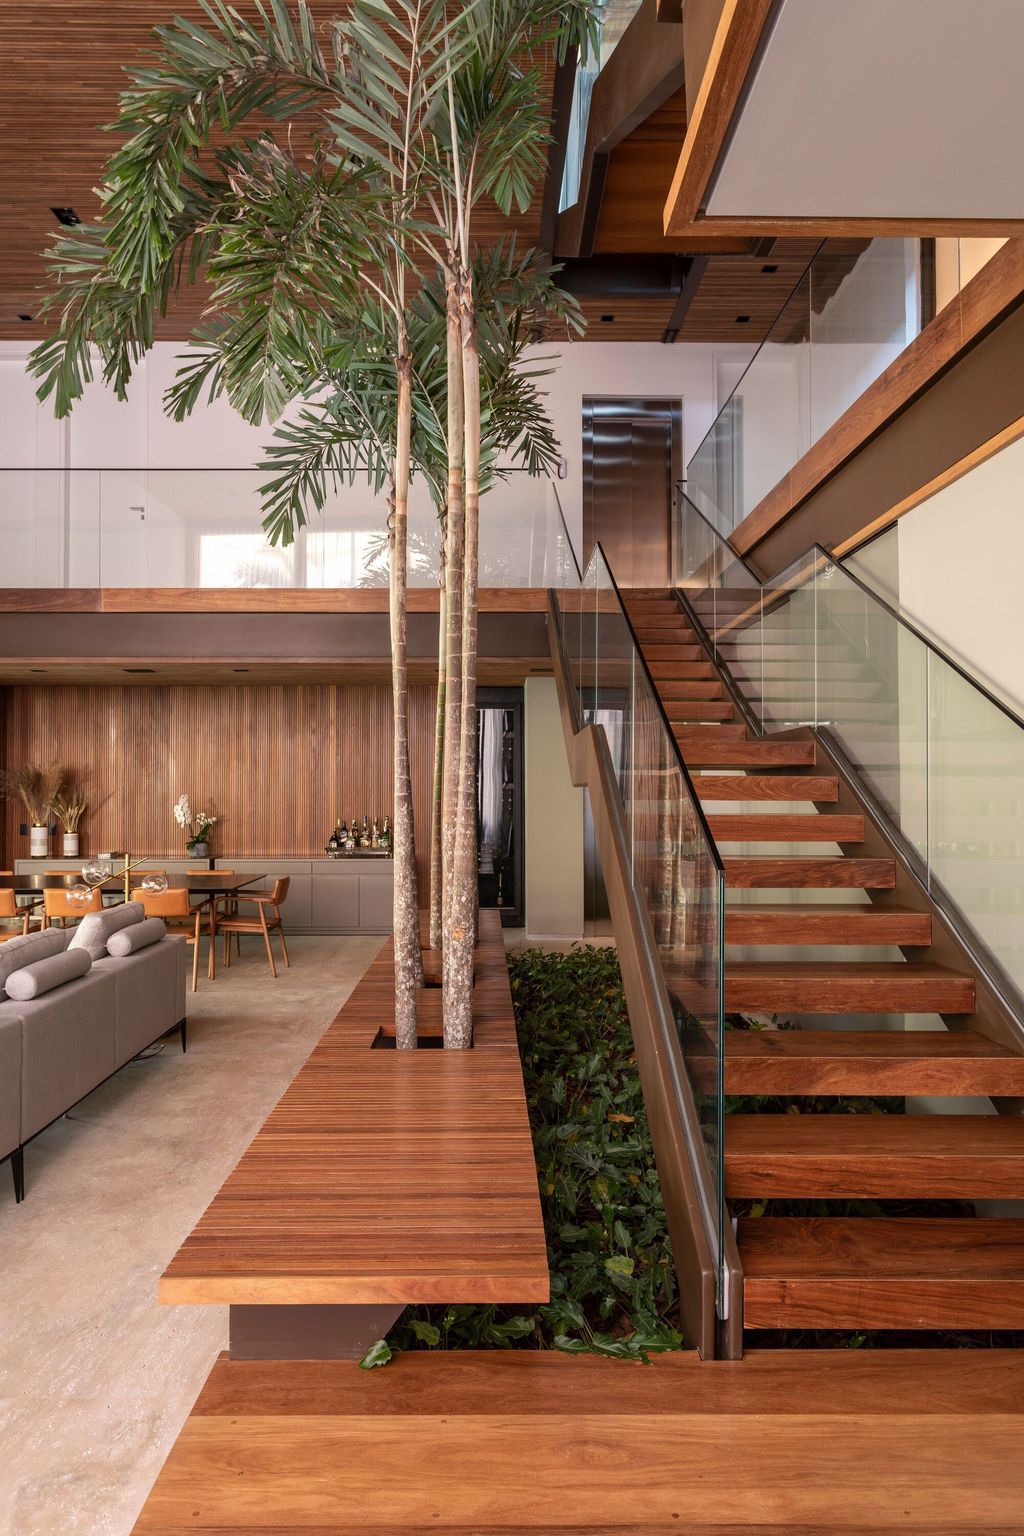 RZ Residence, an Elegant Project by Padovani Arquitetos Associados